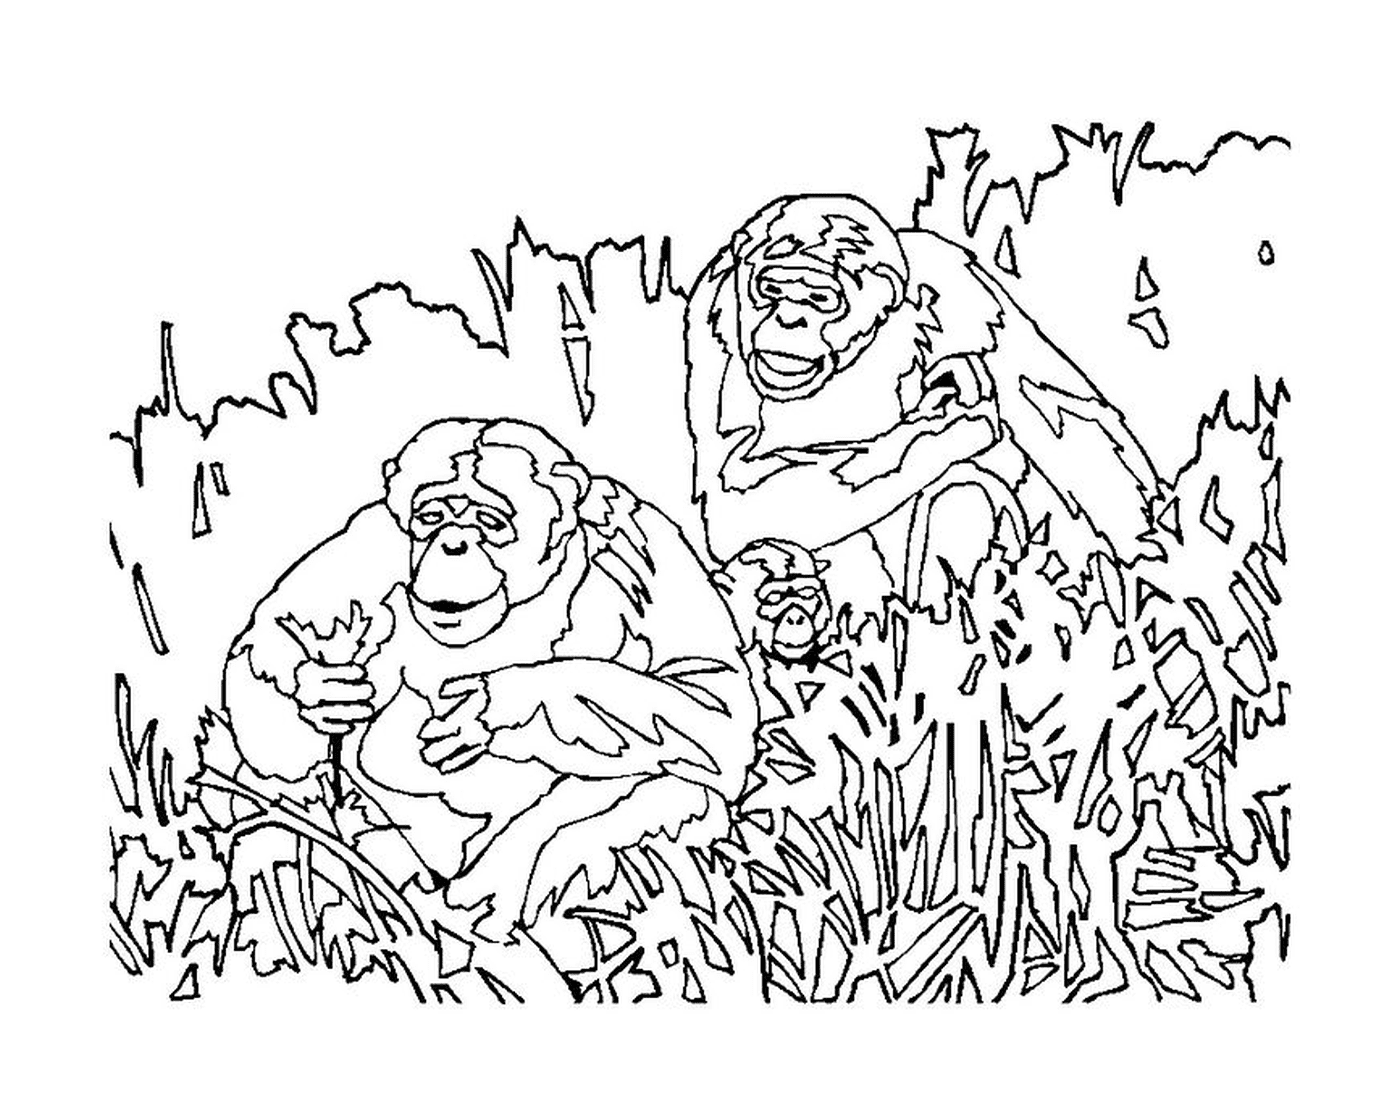  Monkeys sitting in the grass 